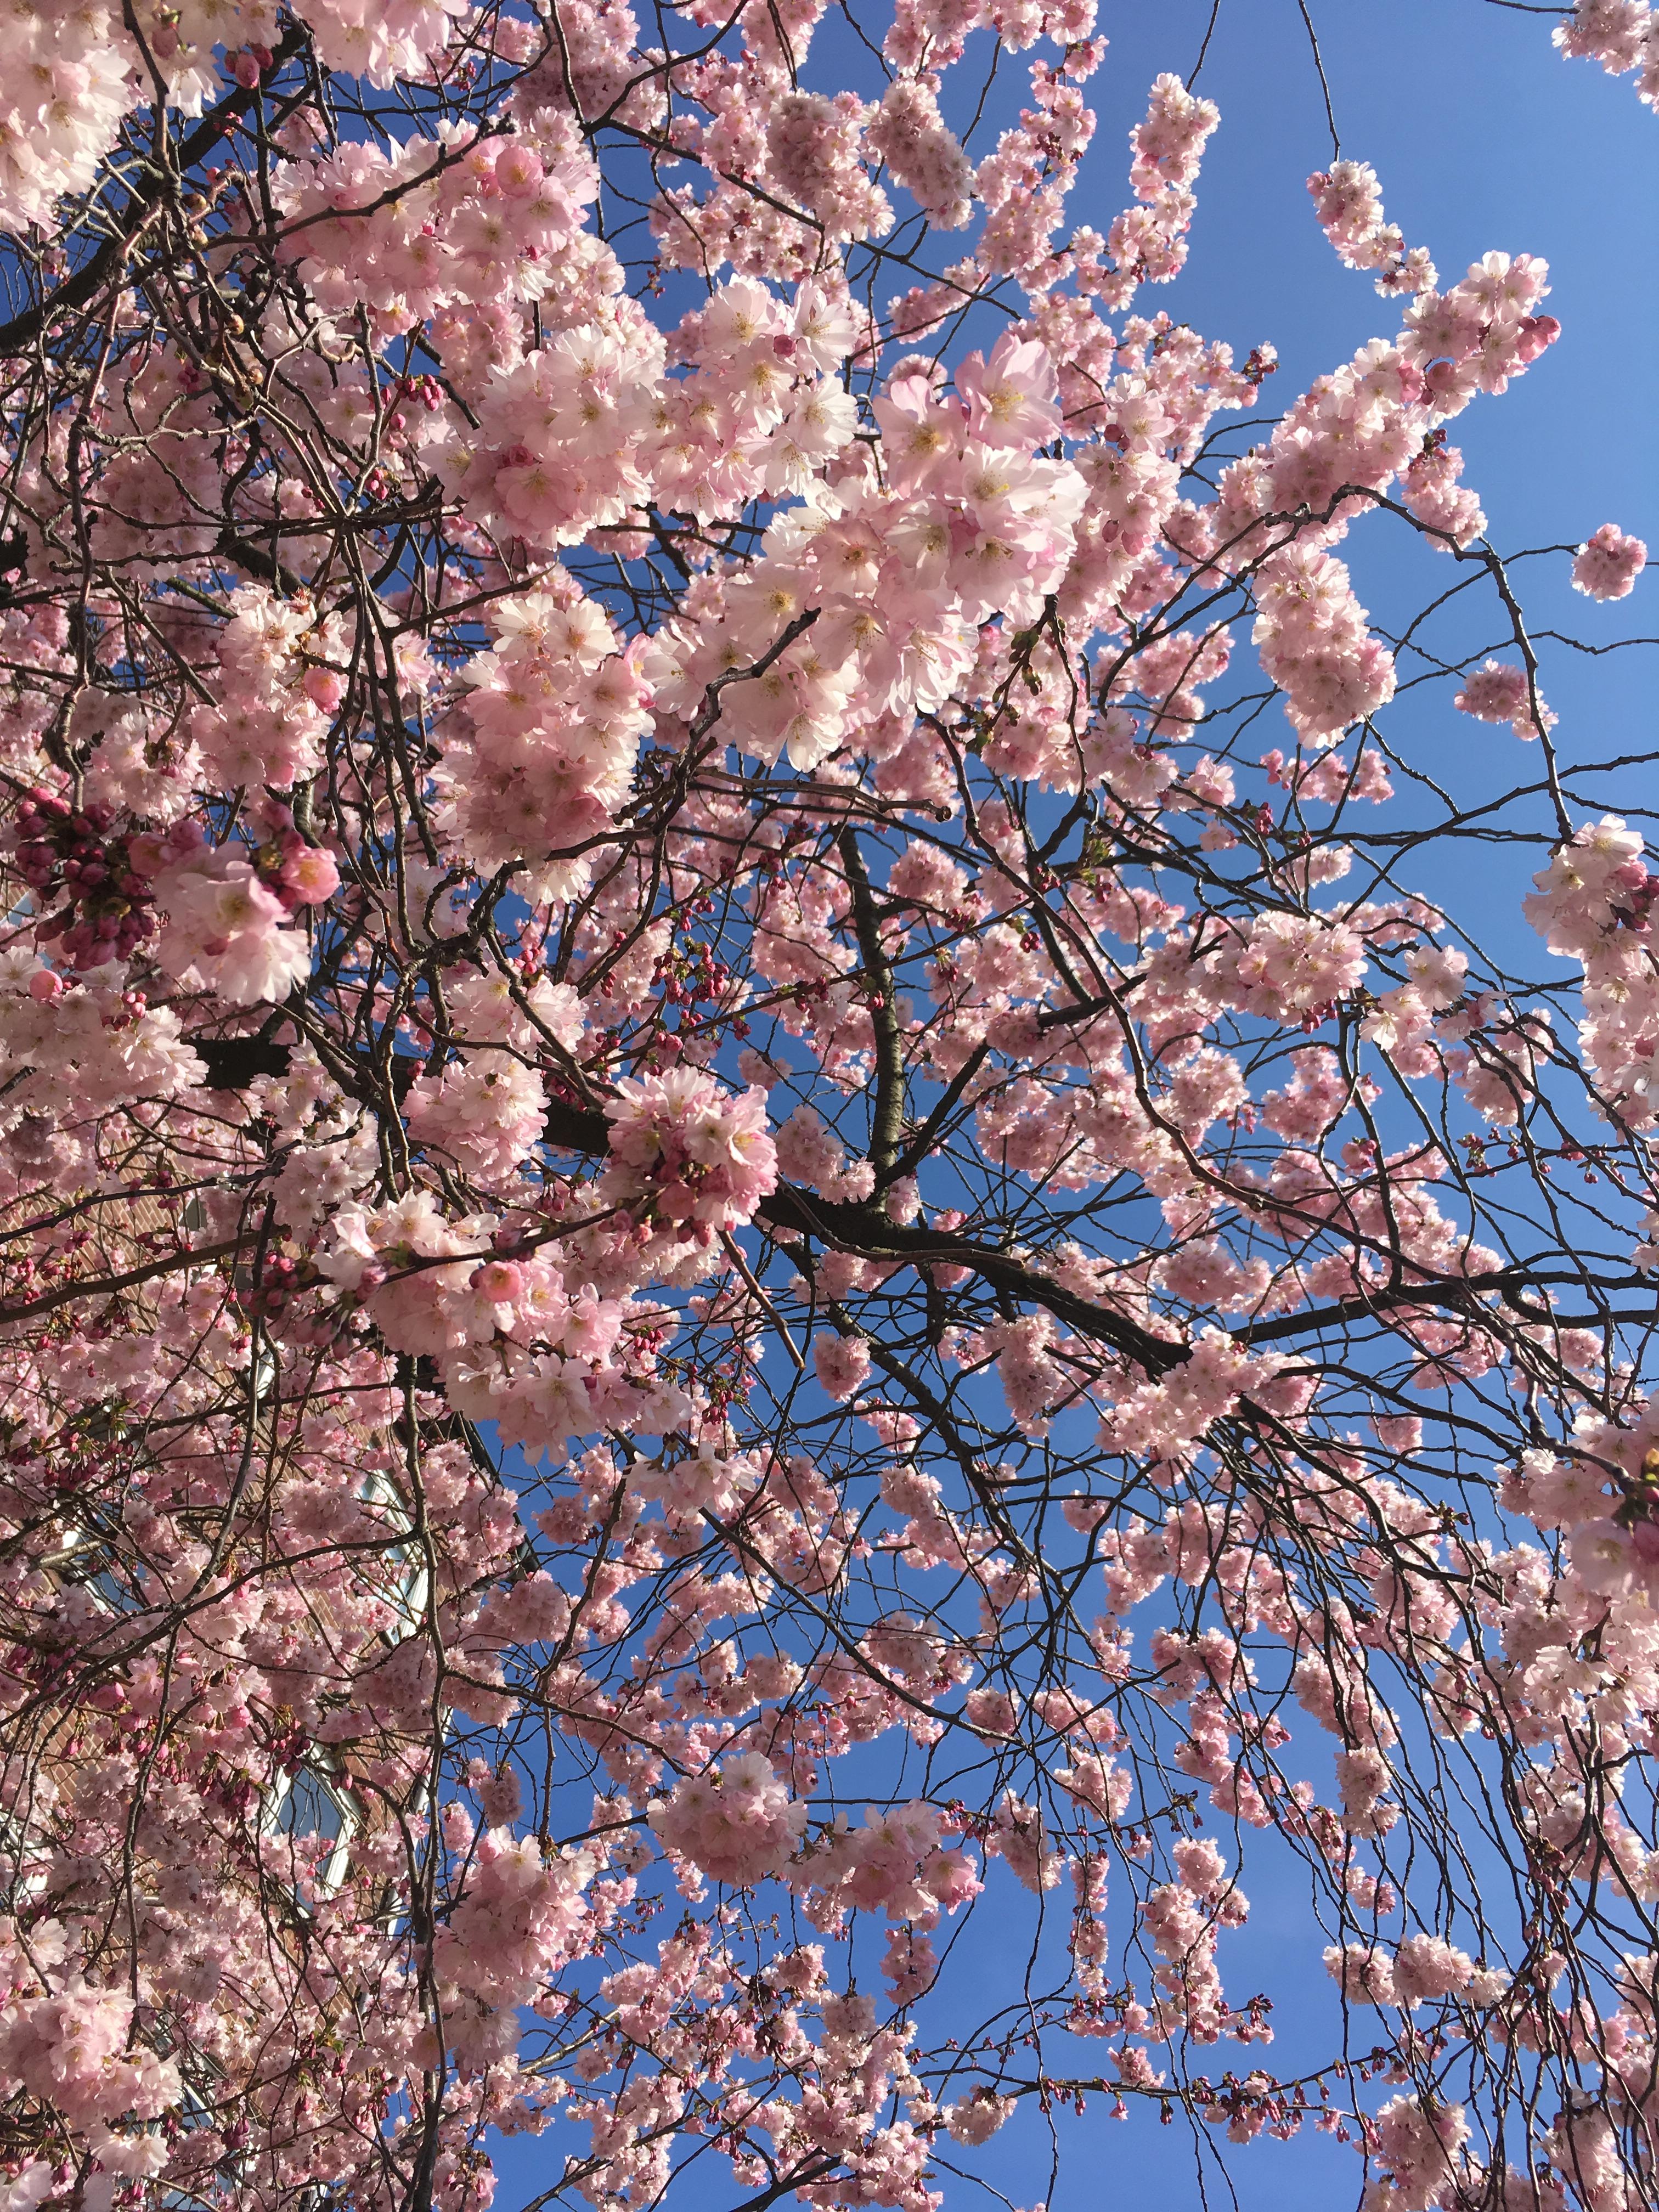 #cherryblossom #abinsgruene #spring #COUCHstyle